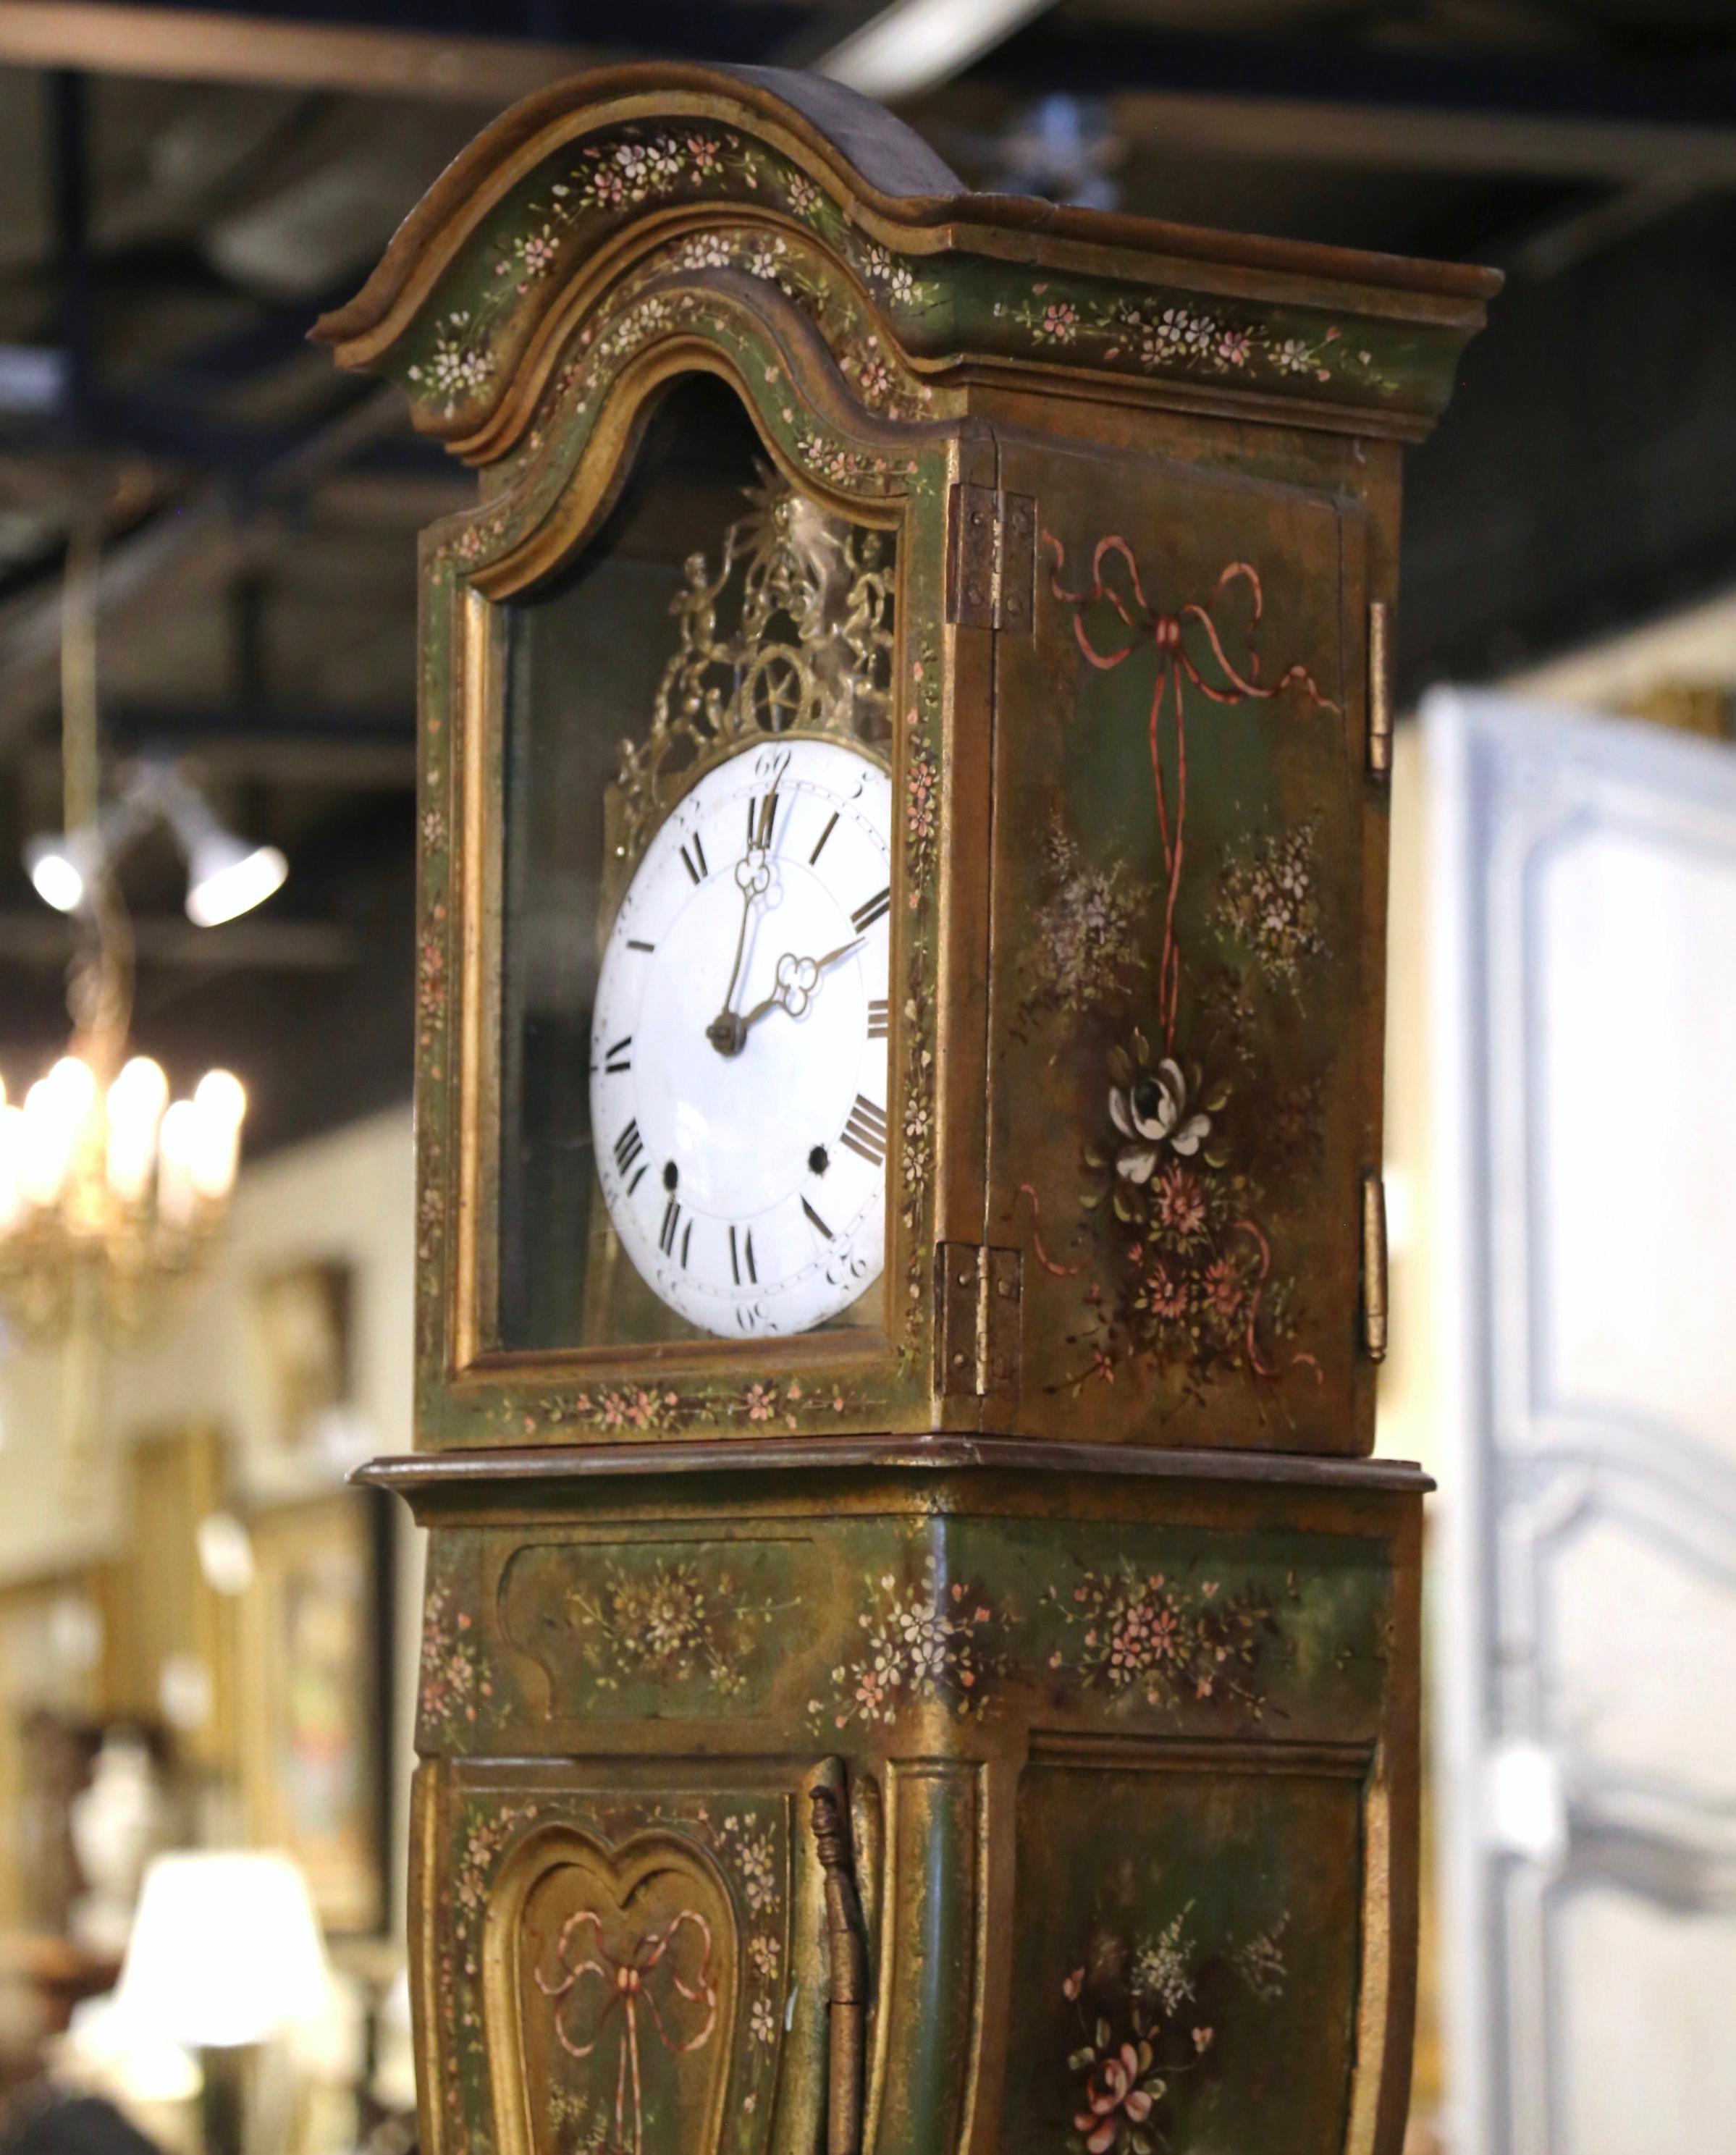 legant grandfather clock